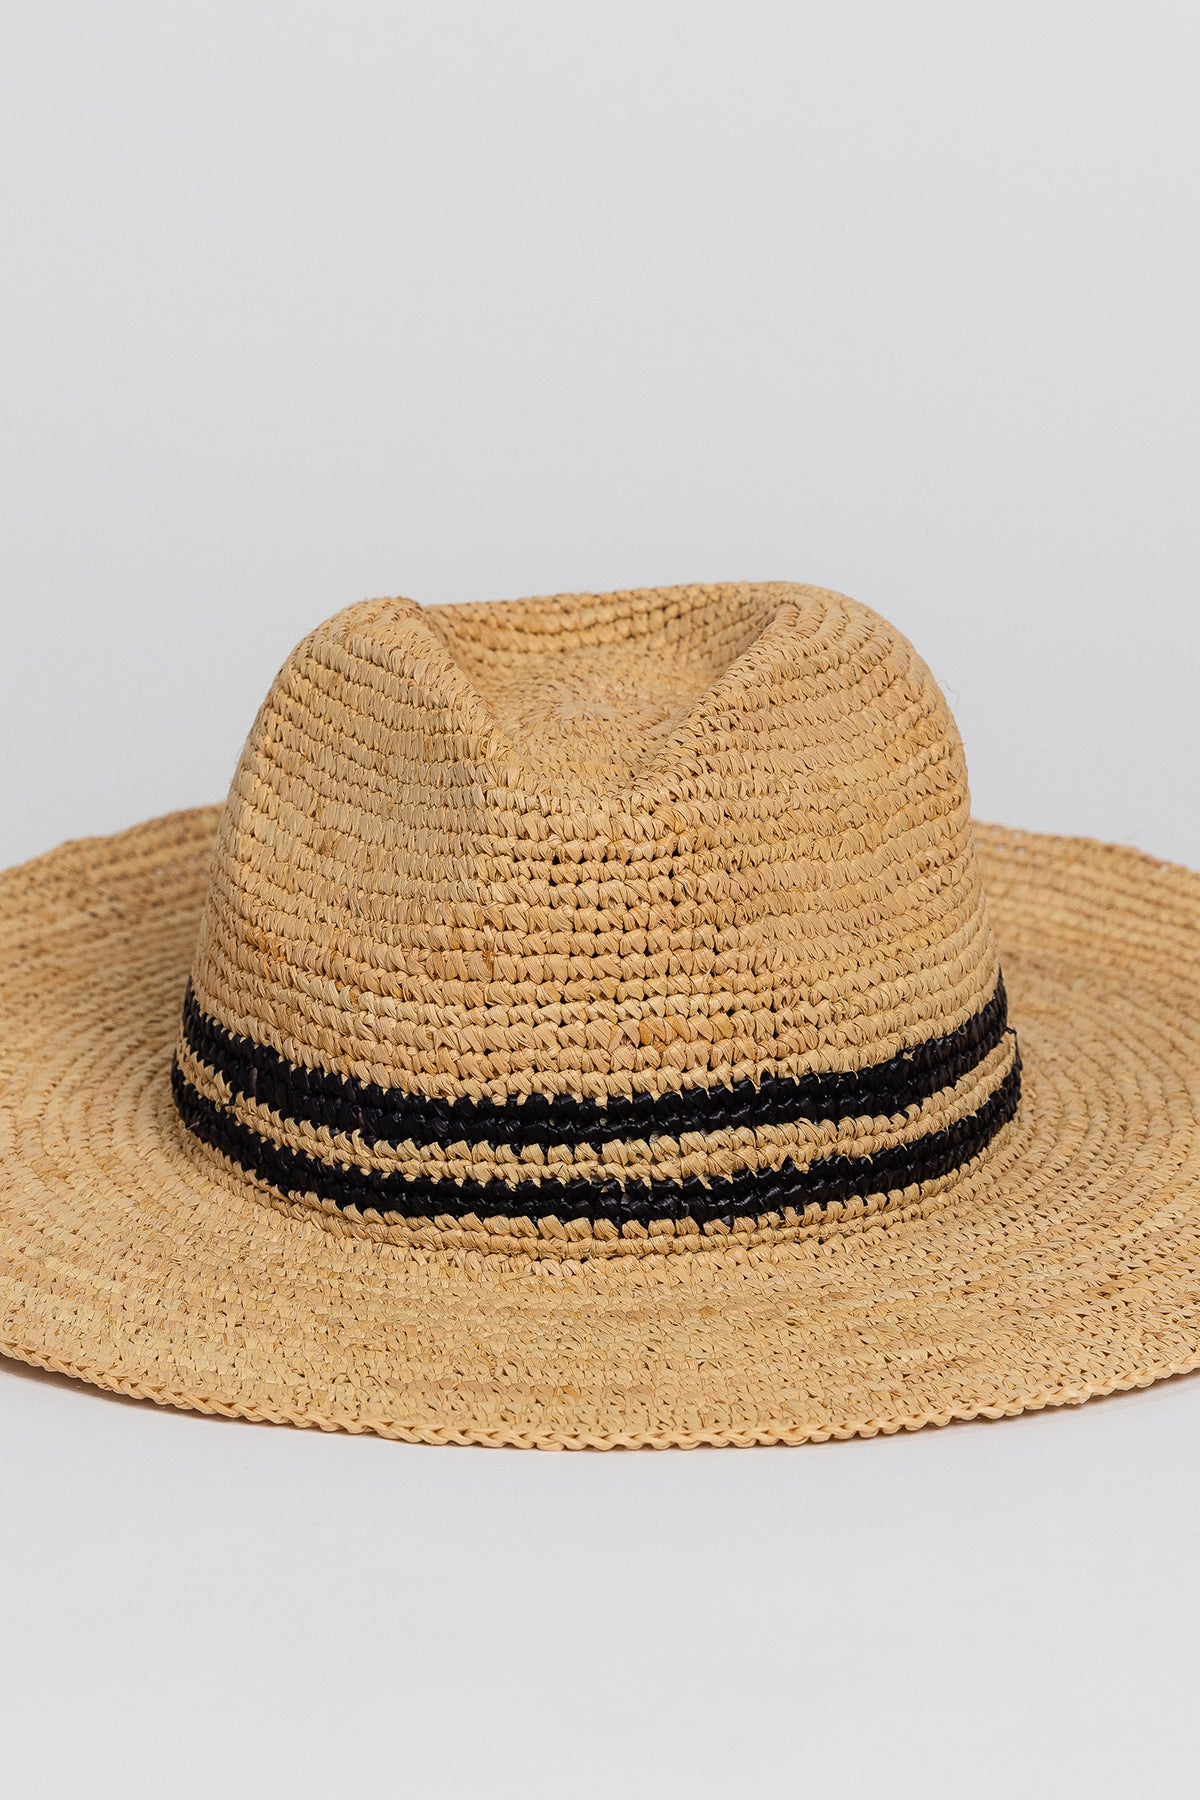 a SADONA RANCHER HAT by Velvet by Graham & Spencer with a black stripe.-26166342156481